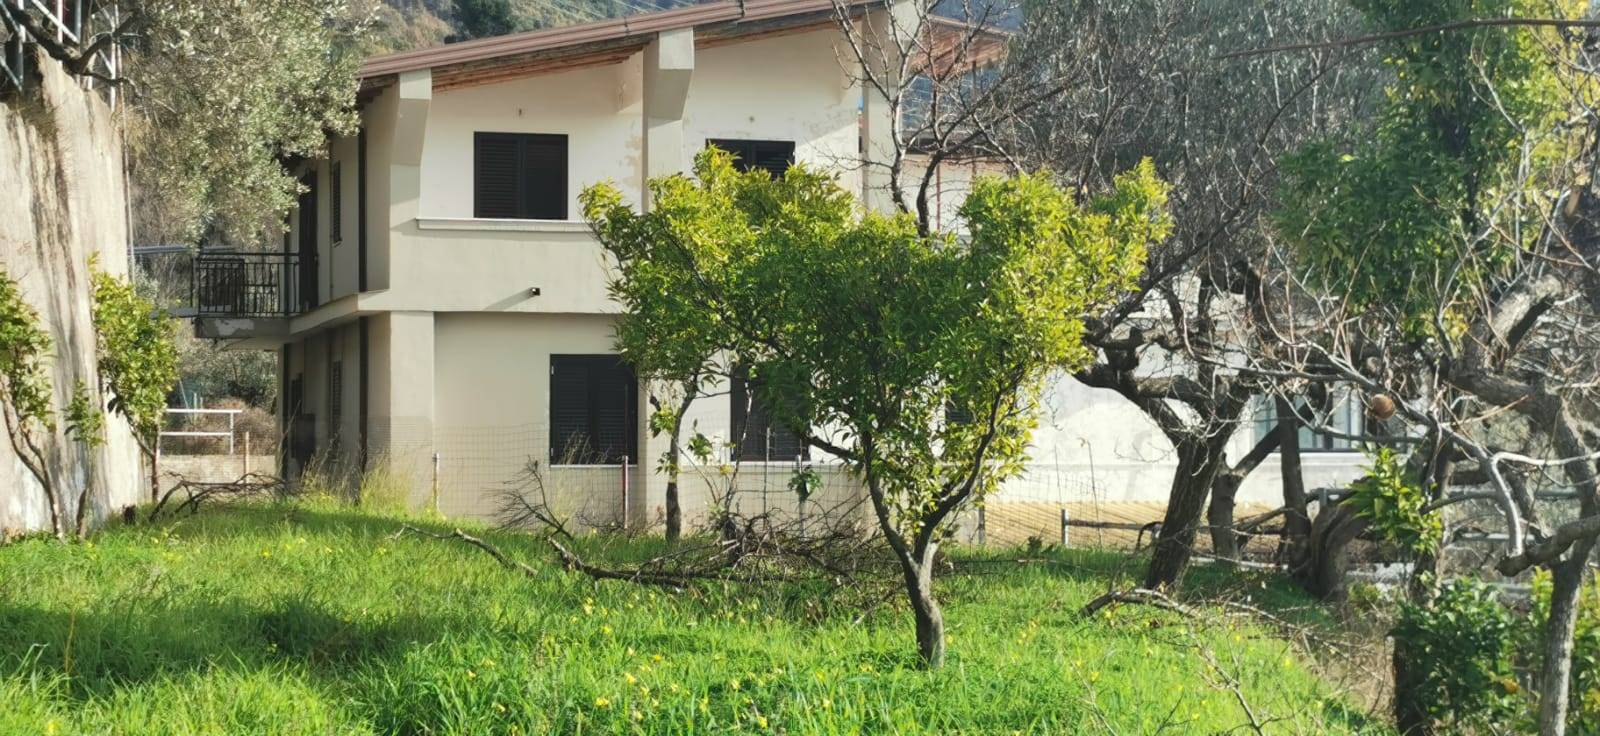 Villa abitabile in zona Ogliara a Salerno